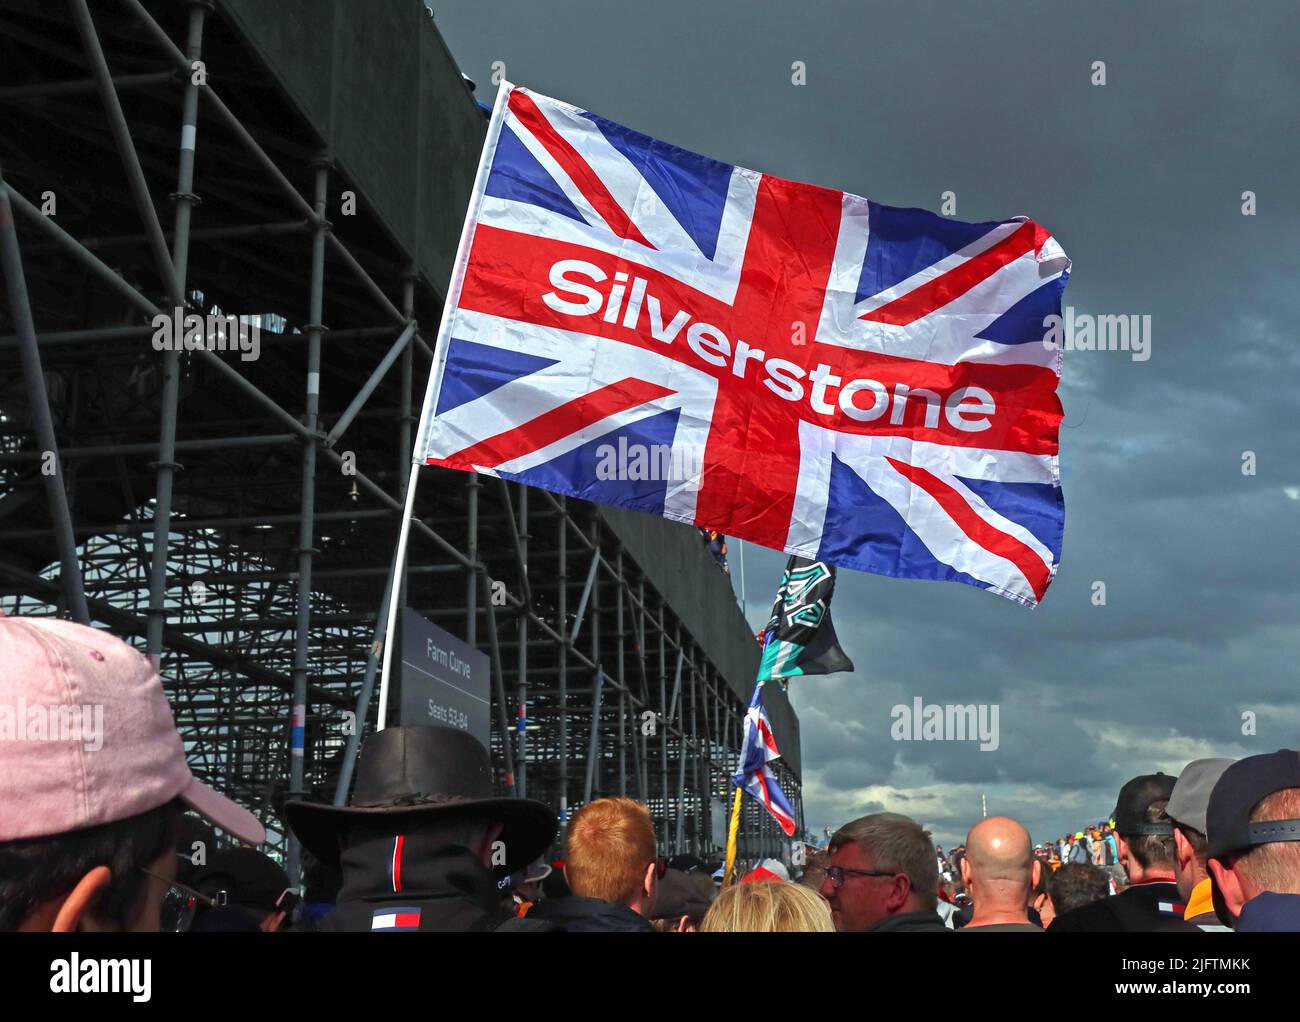 Silverstone British Union Jack Flag, circuit Silverstone, Silverstone Village, Towcester, Northamptonshire, ANGLETERRE, ROYAUME-UNI, NN12 8TN Banque D'Images